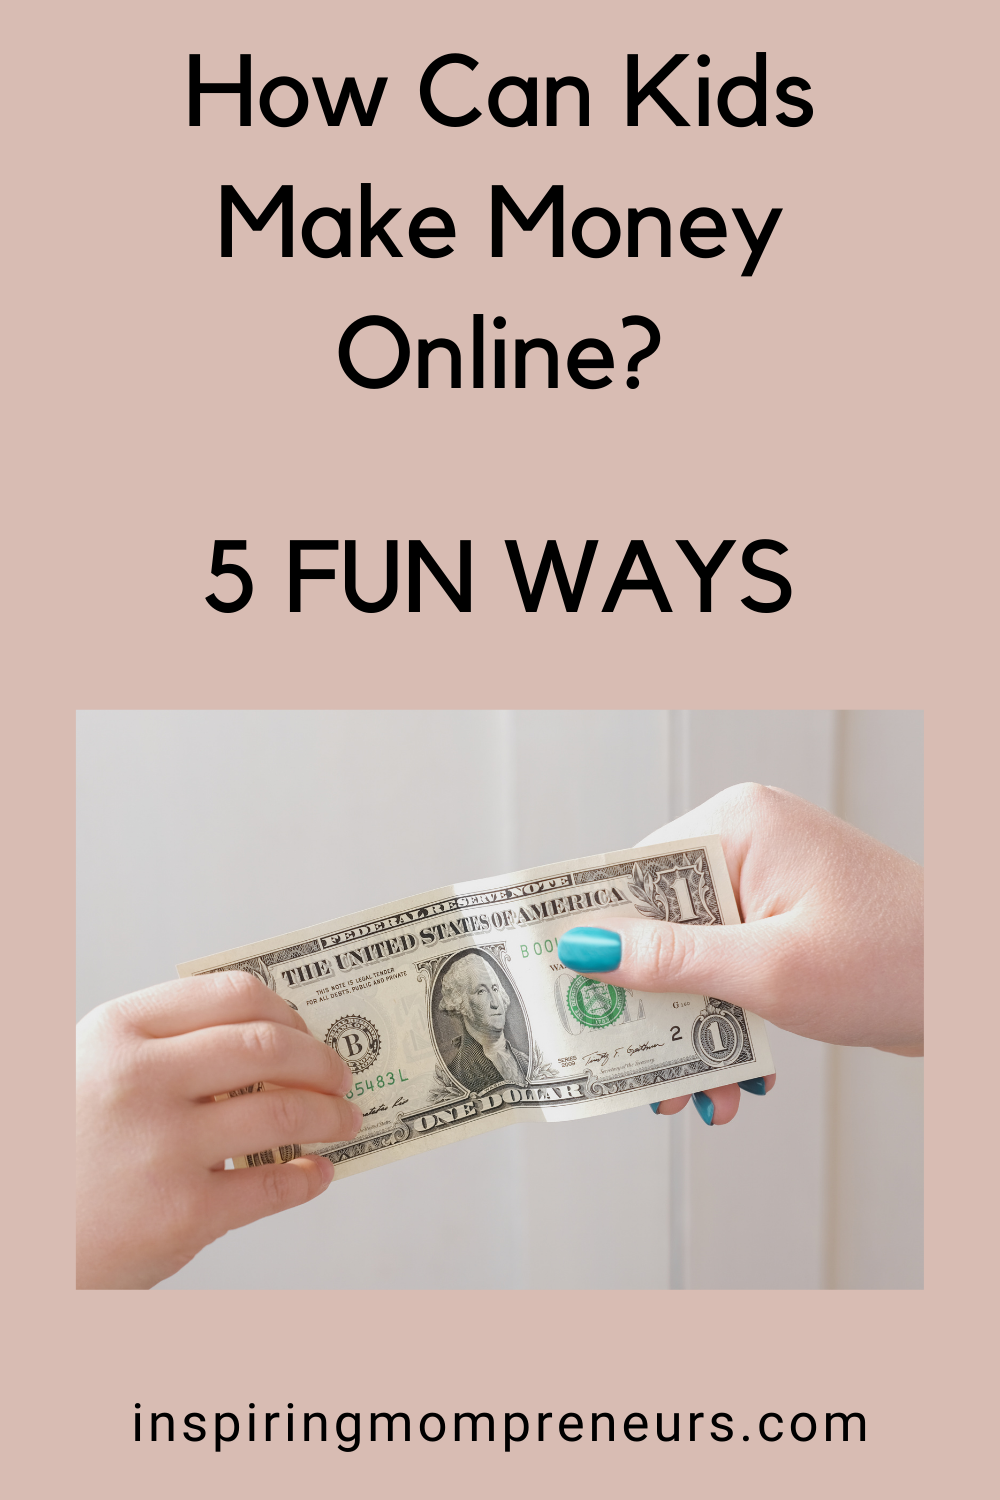 How Can Kids Make Money Online?